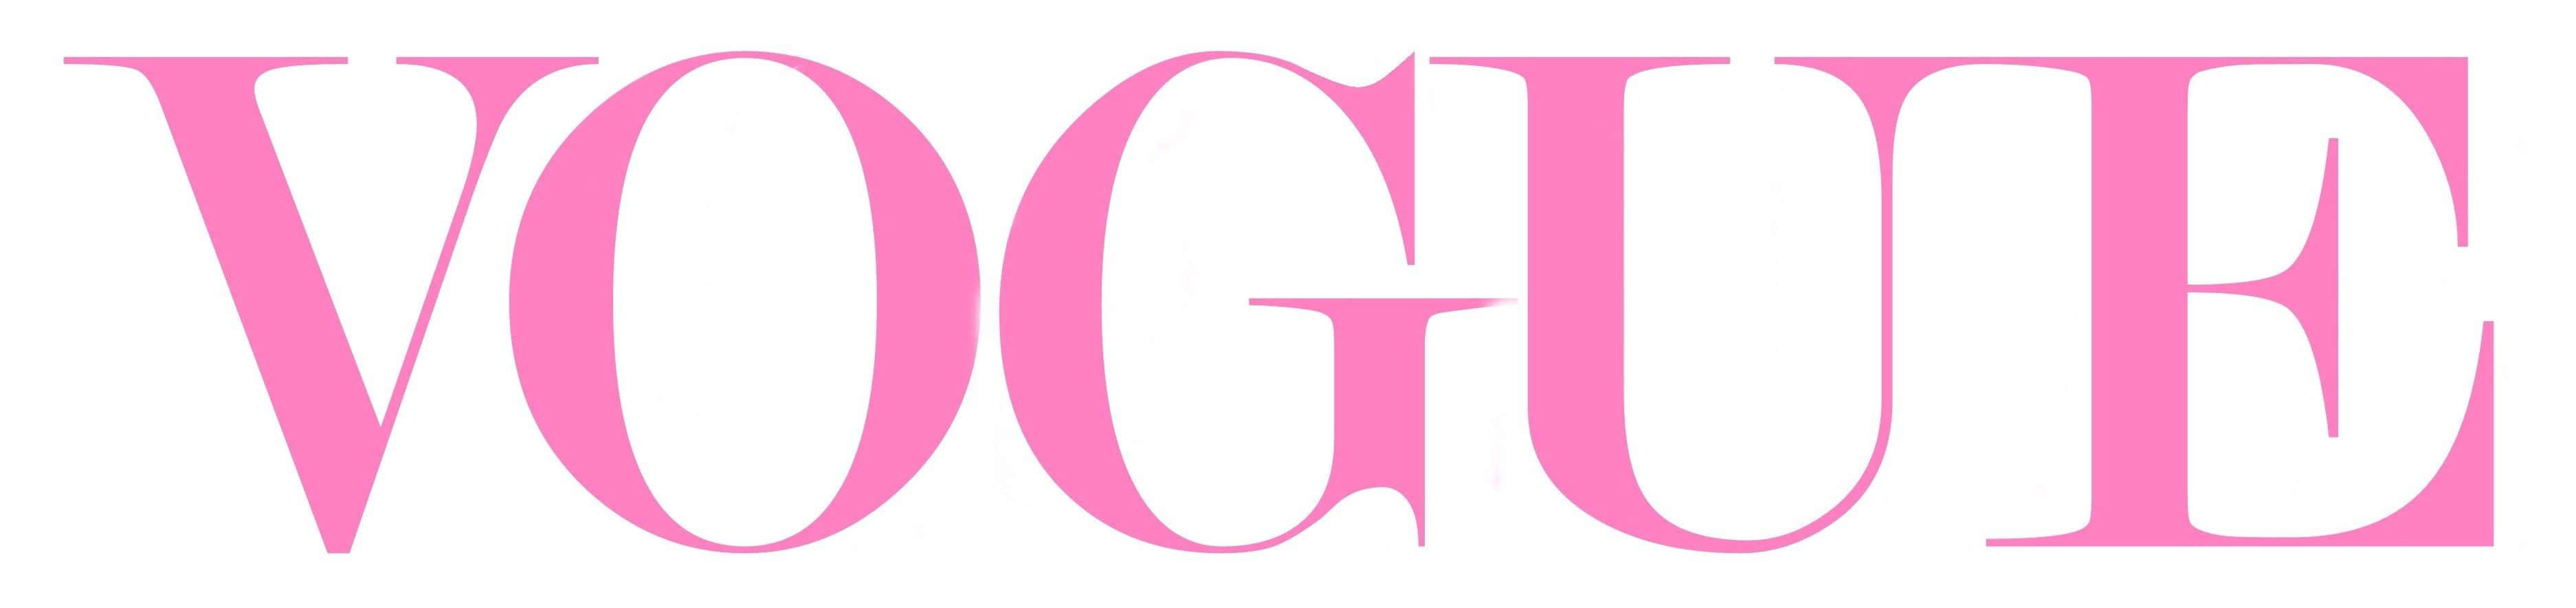 Vogue Magazine Logo Pink Wallpaper